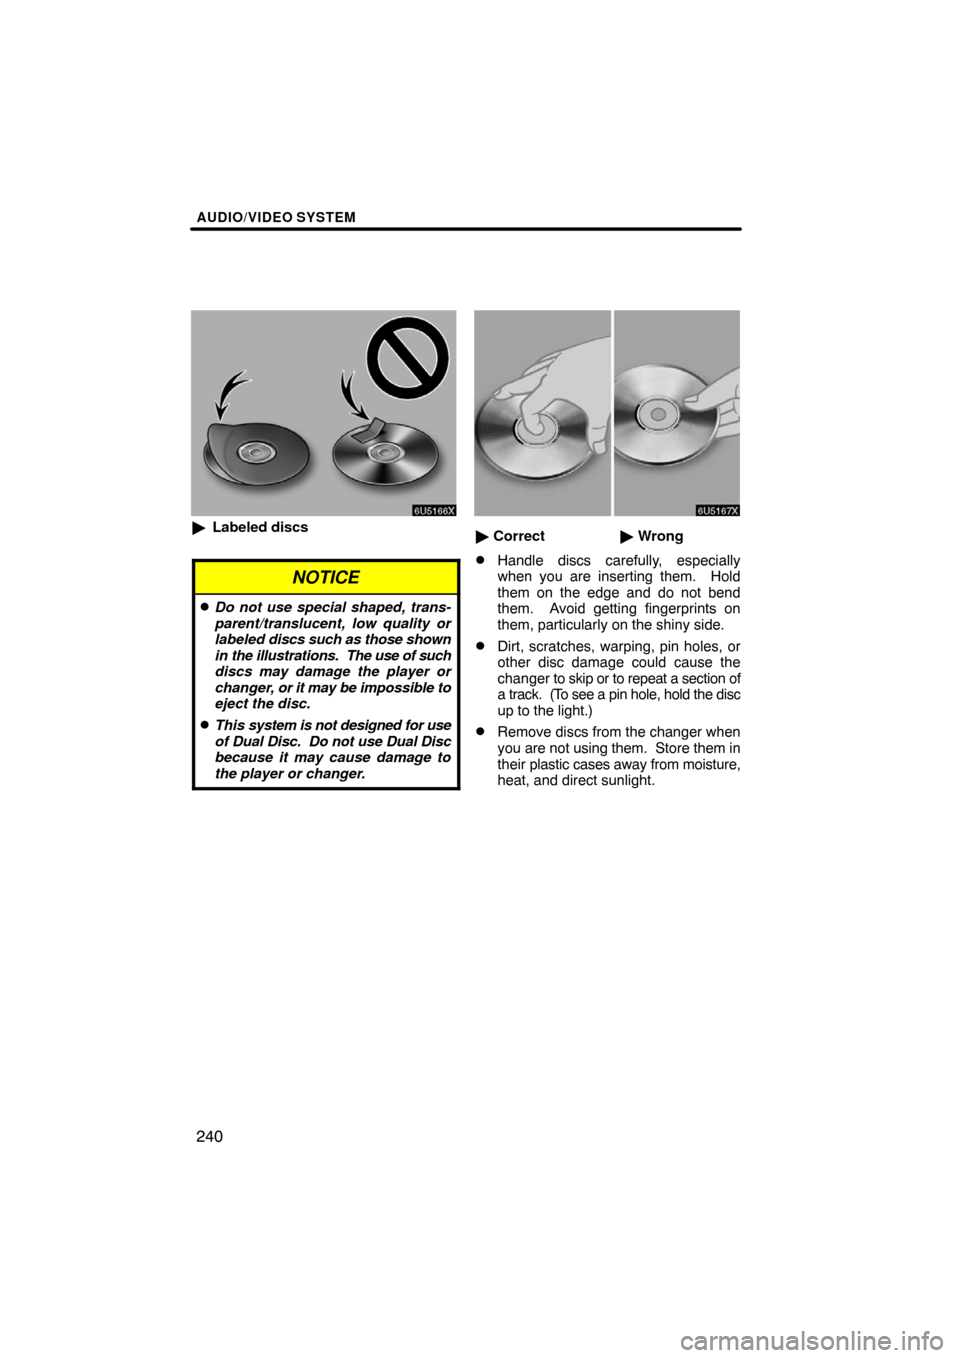 TOYOTA LAND CRUISER 2008 J200 Navigation Manual AUDIO/VIDEO SYSTEM
240
Labeled discs
NOTICE
Do not use special shaped, trans-
parent/translucent, low quality or
labeled discs such as those shown
in the illustrations.  The use of such
discs may da